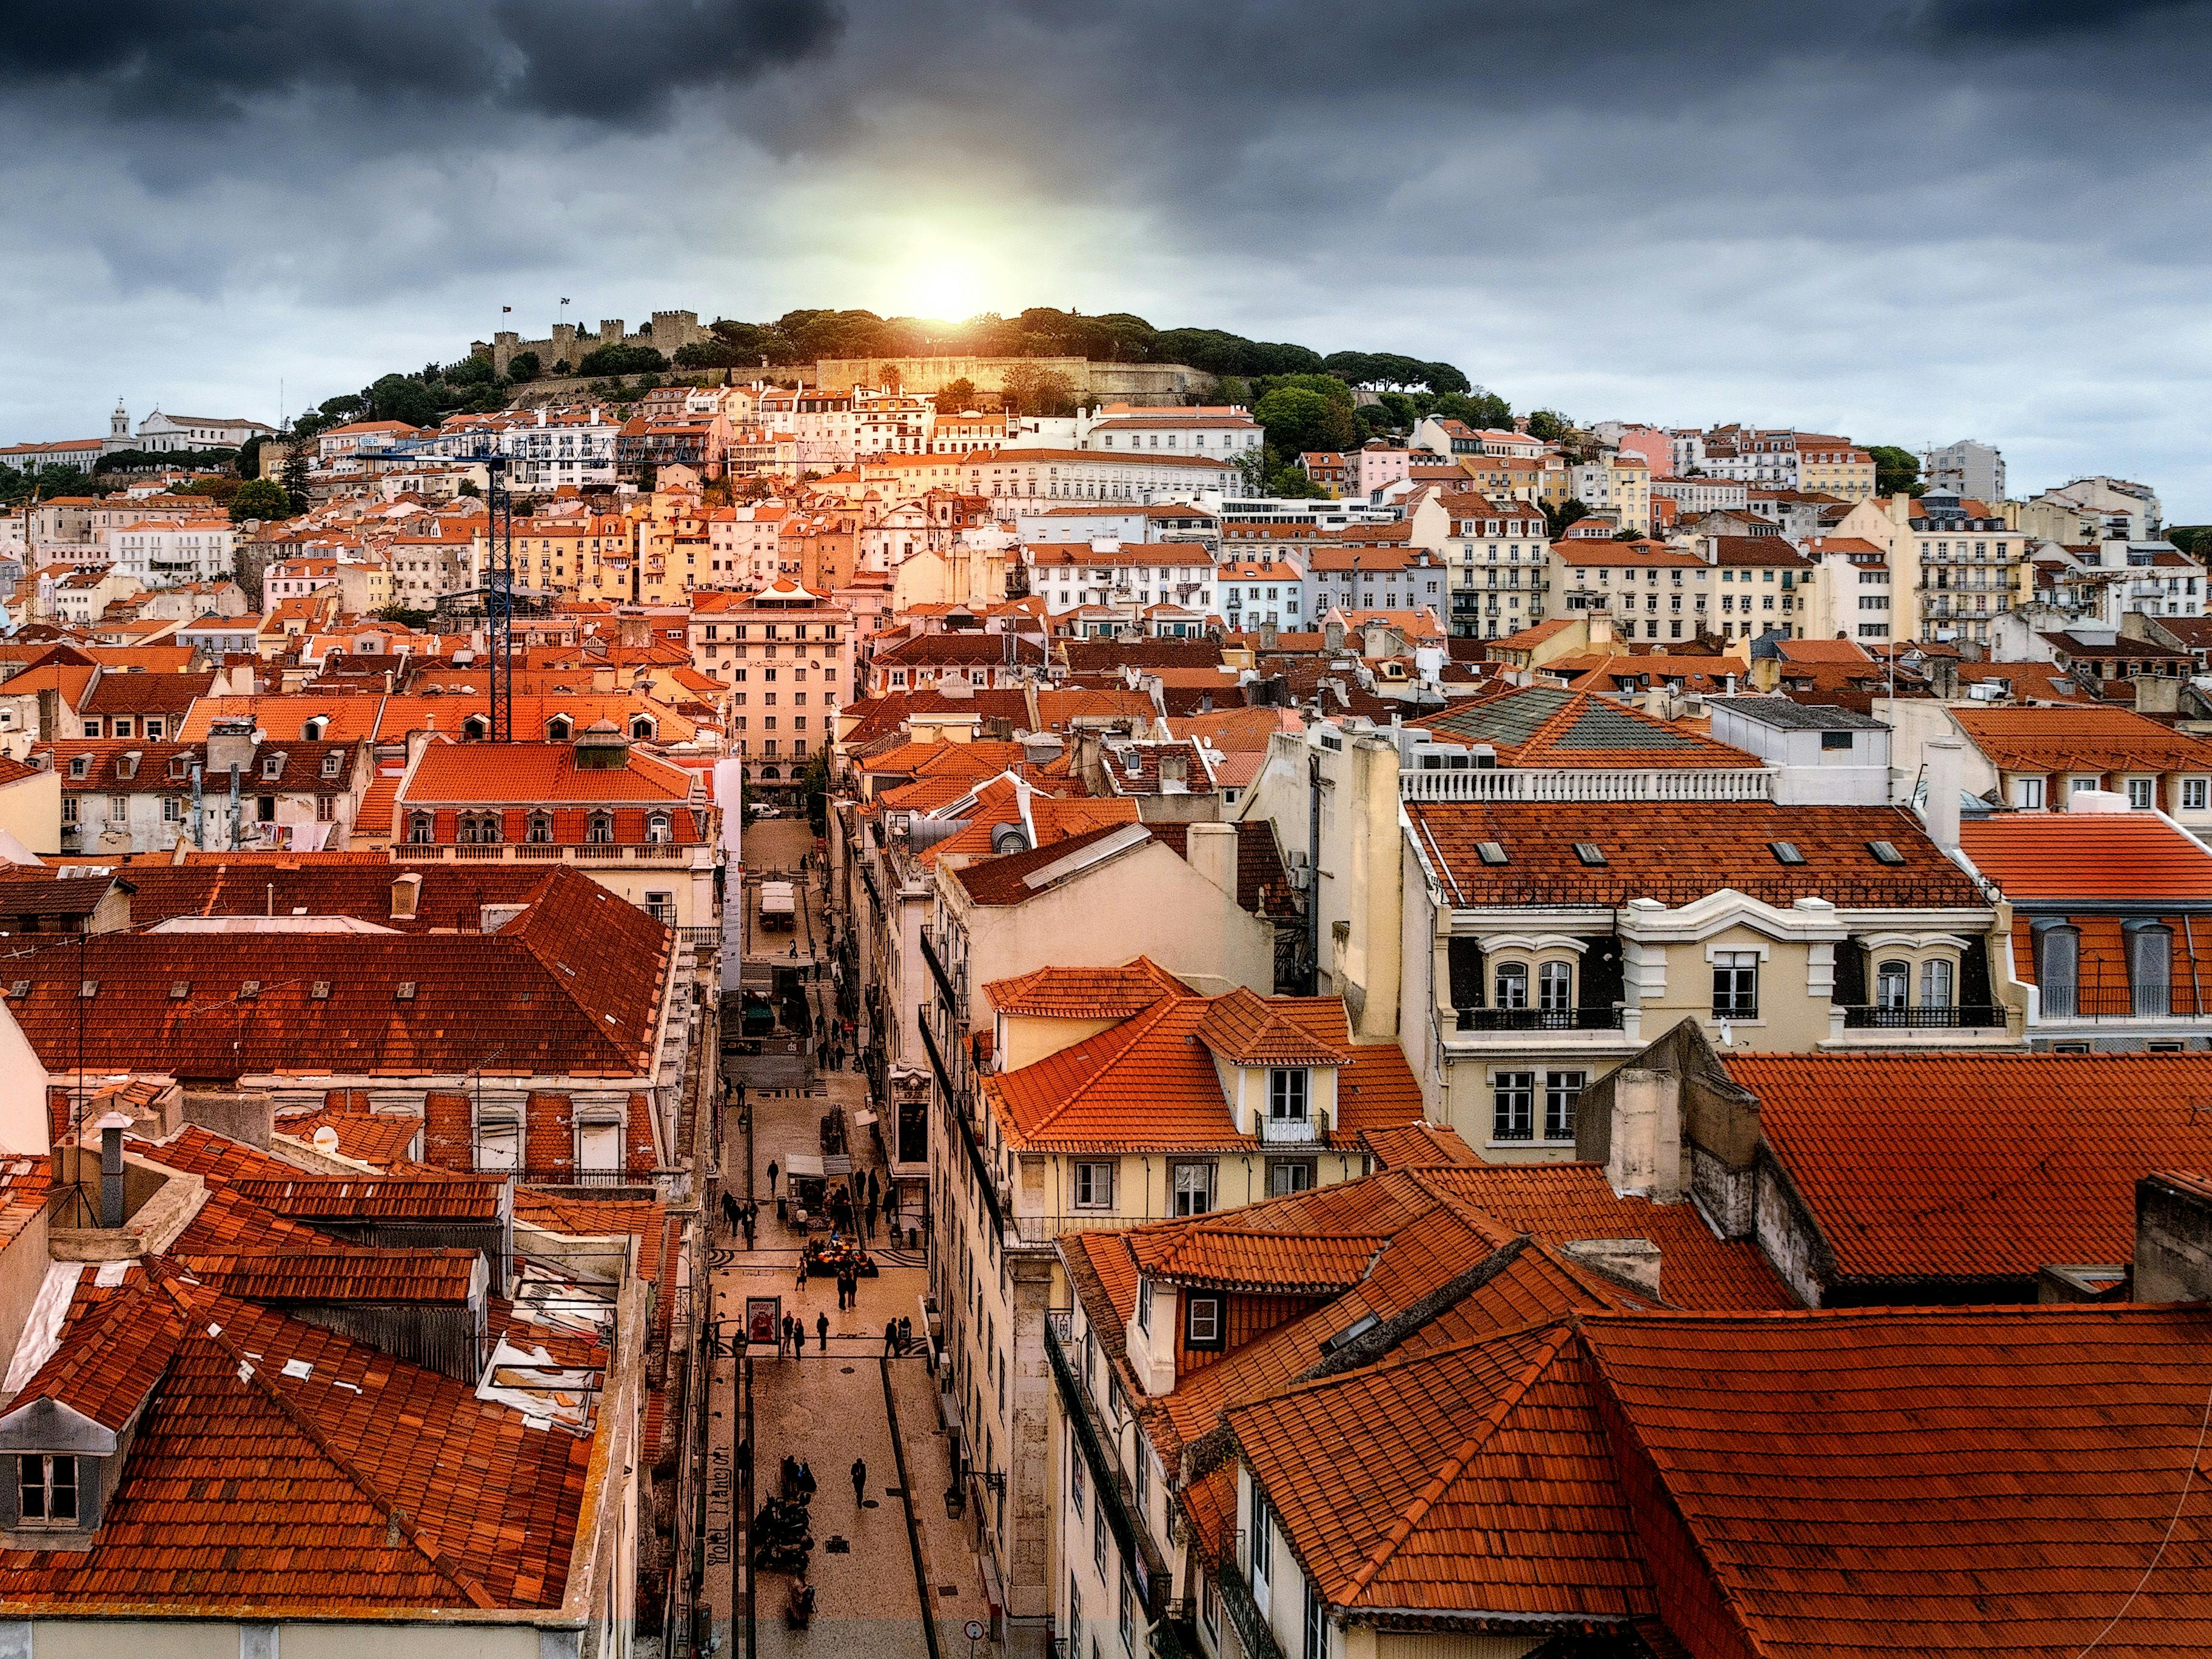 Visita guiada aos destaques históricos de Lisboa